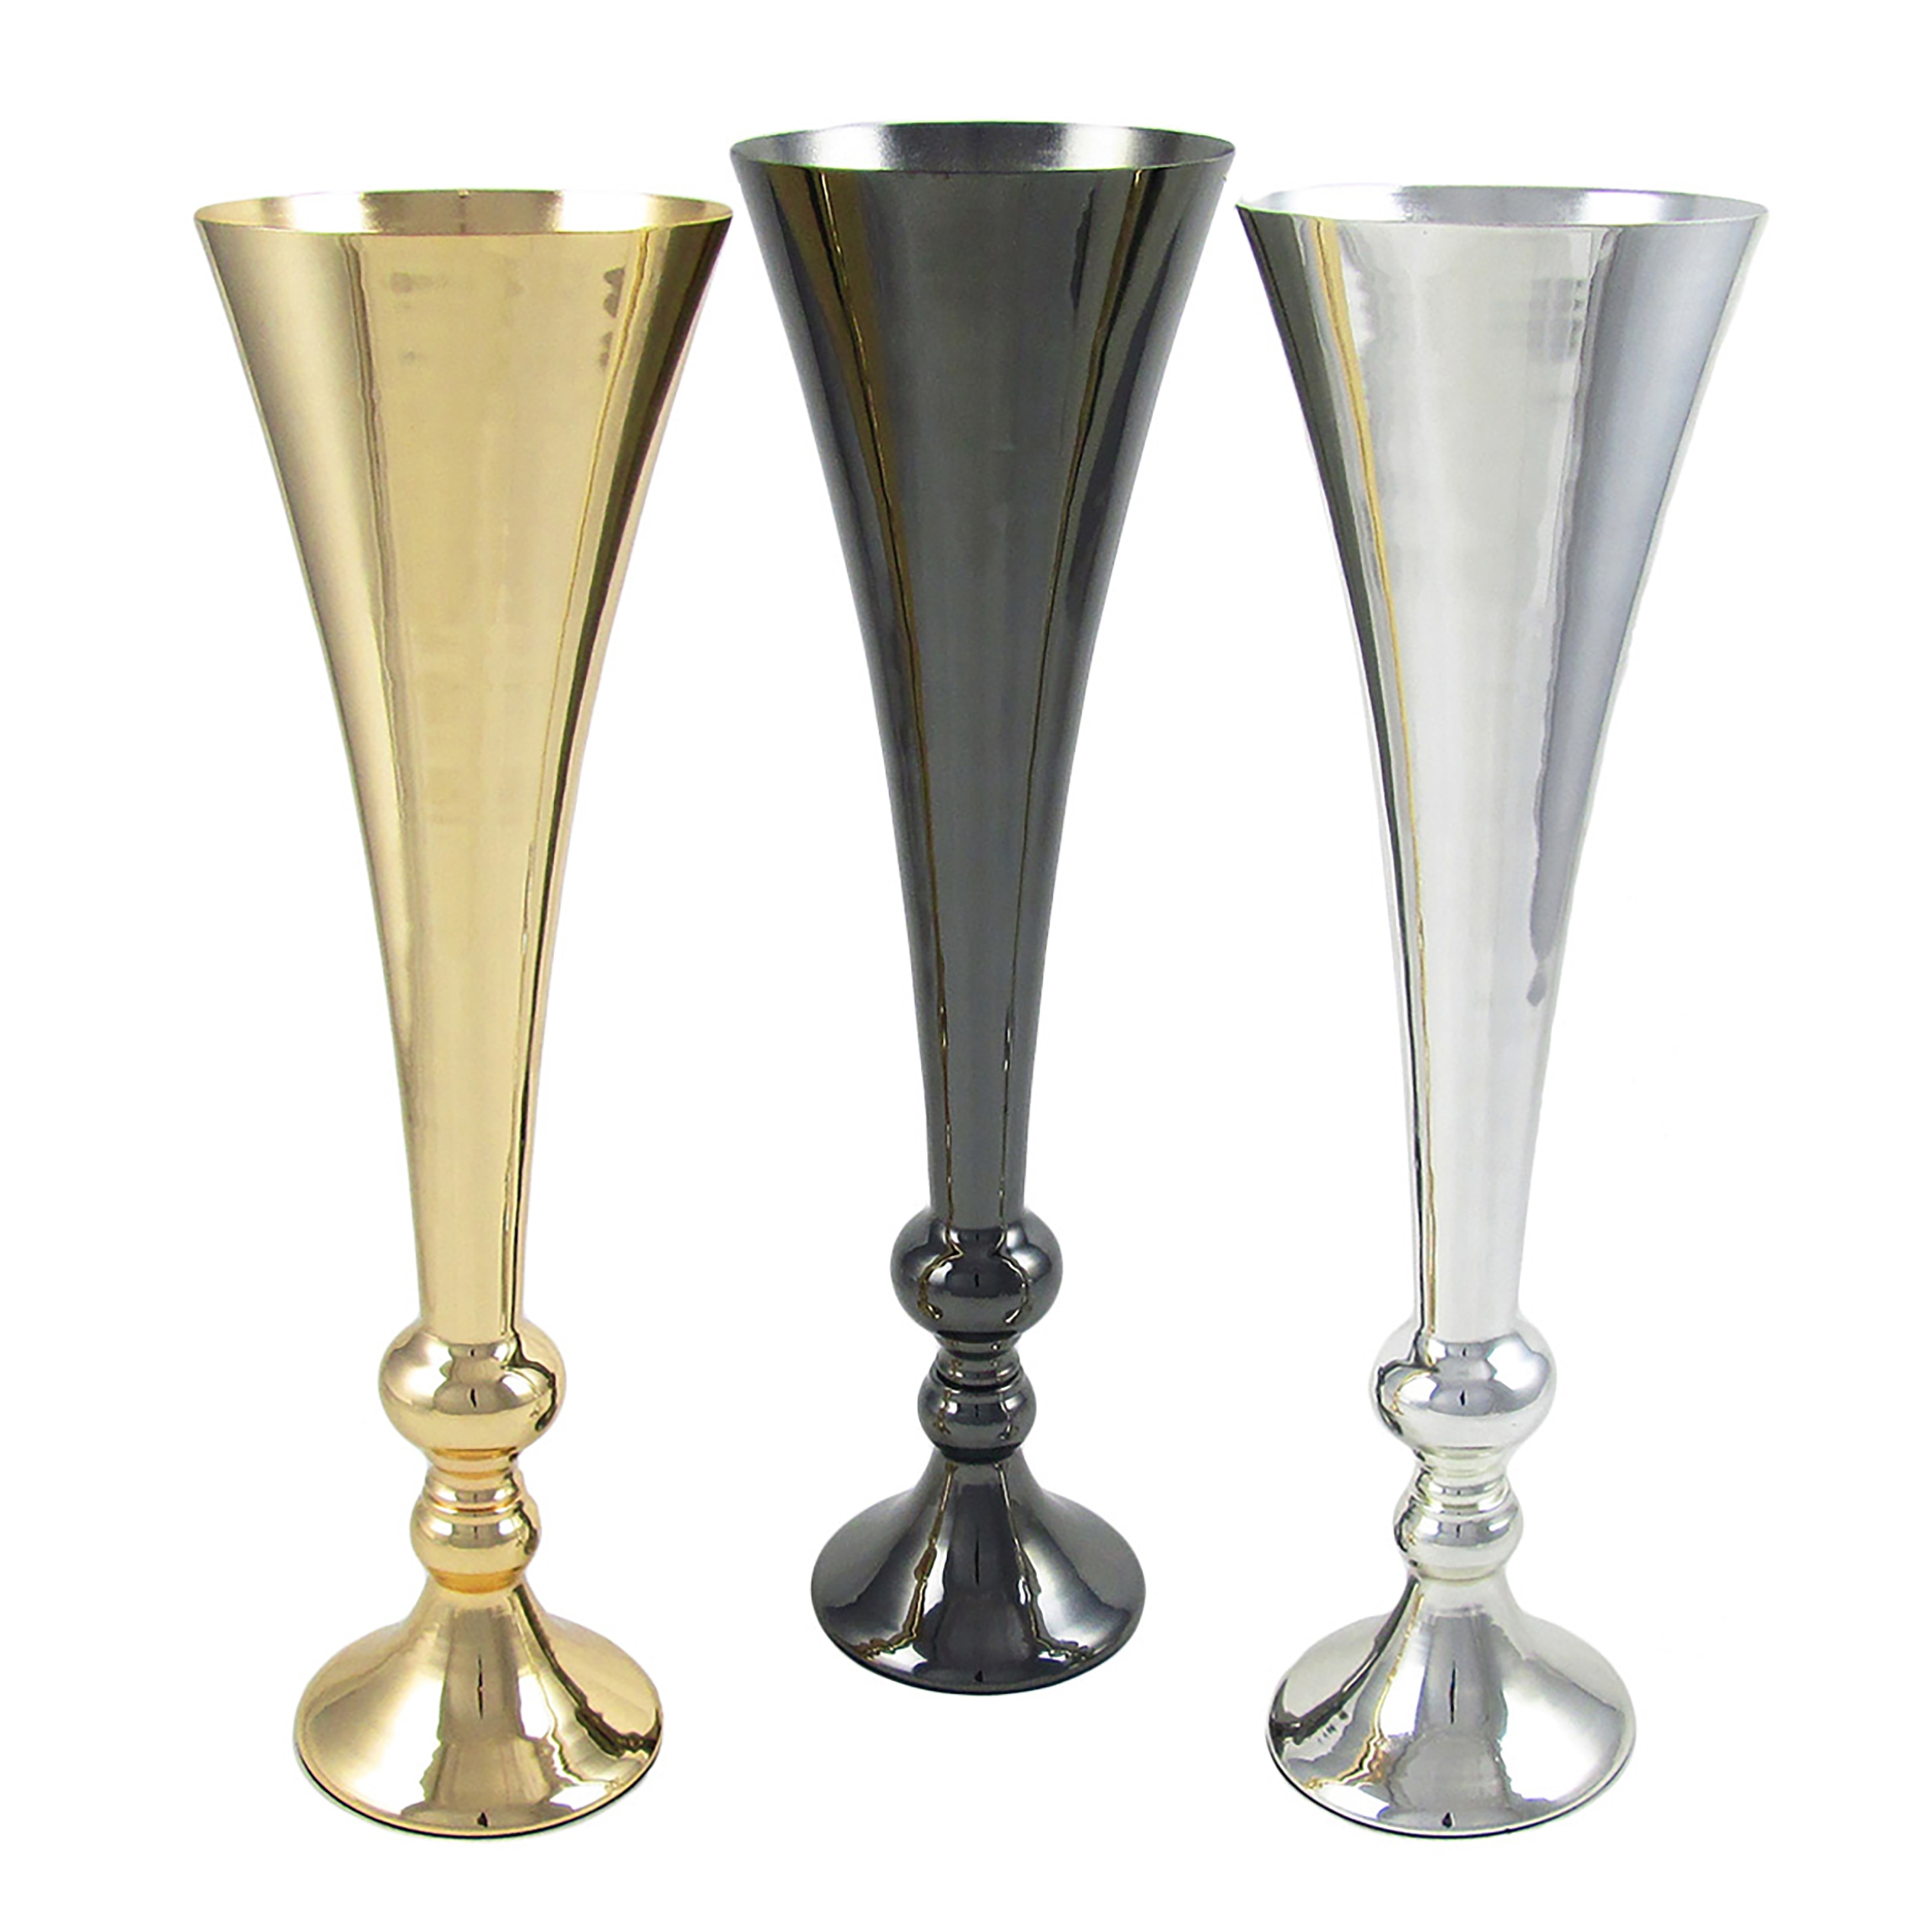 https://ak1.ostkcdn.com/images/products/is/images/direct/bc461b7c603fbc22c74ed7430758dbe50f715950/Silver-Metal-Flute-Trumpet-Flower-Vase-Decorative-Centerpiece.jpg